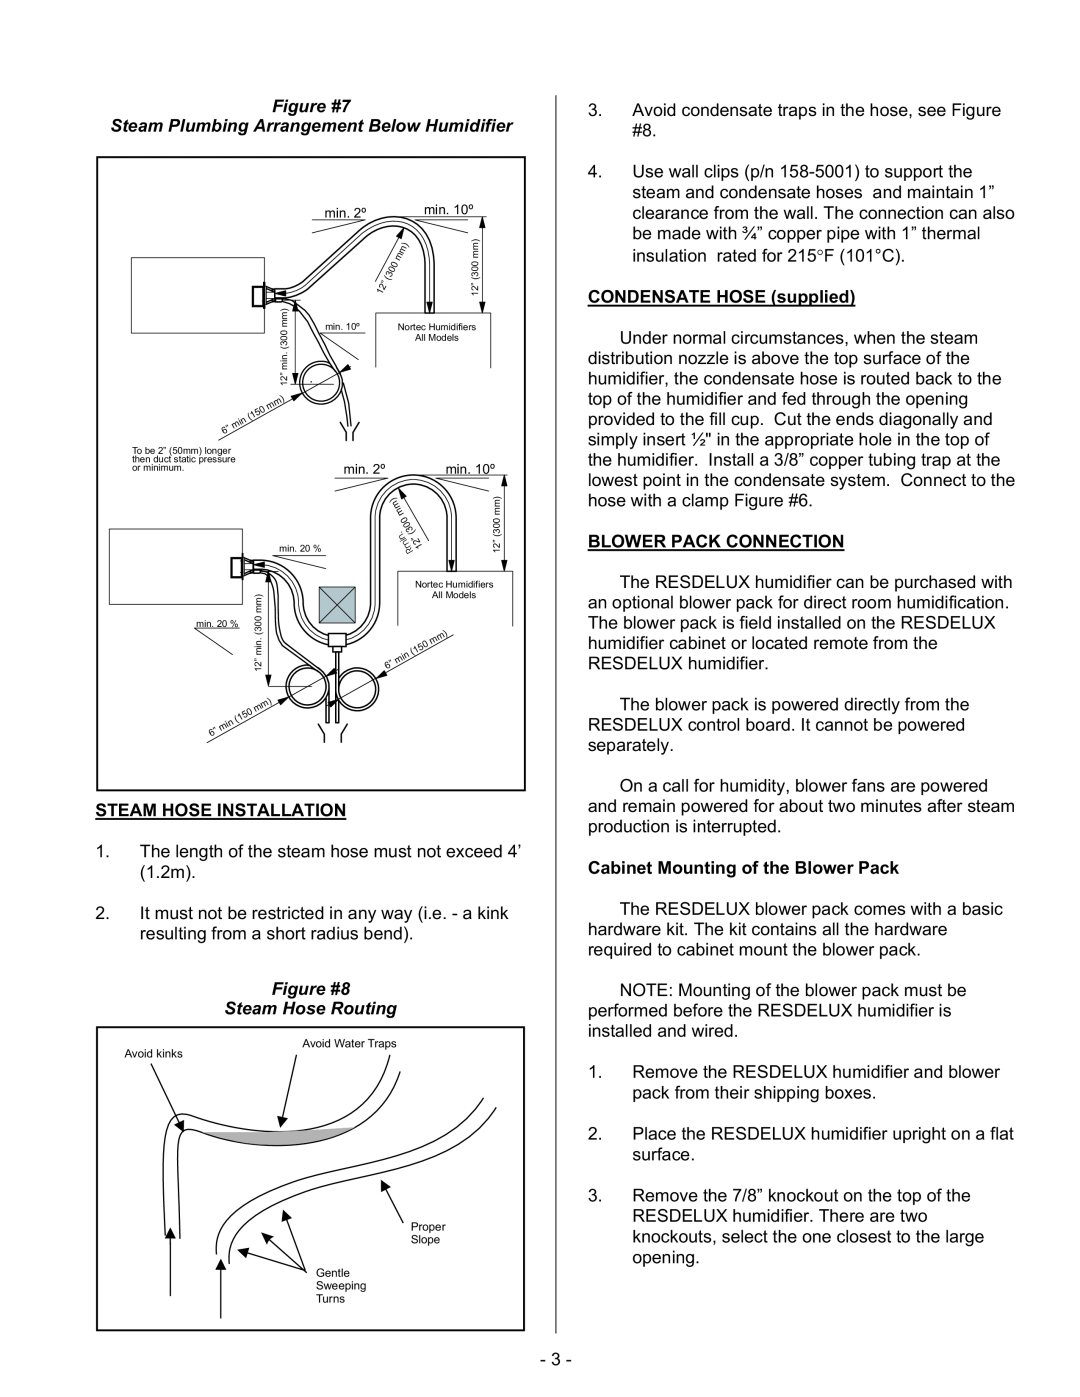 Nortec Steam Humidifiers manual Figure #7, Steam Plumbing Arrangement Below Humidifier, CONDENSATE HOSE supplied 